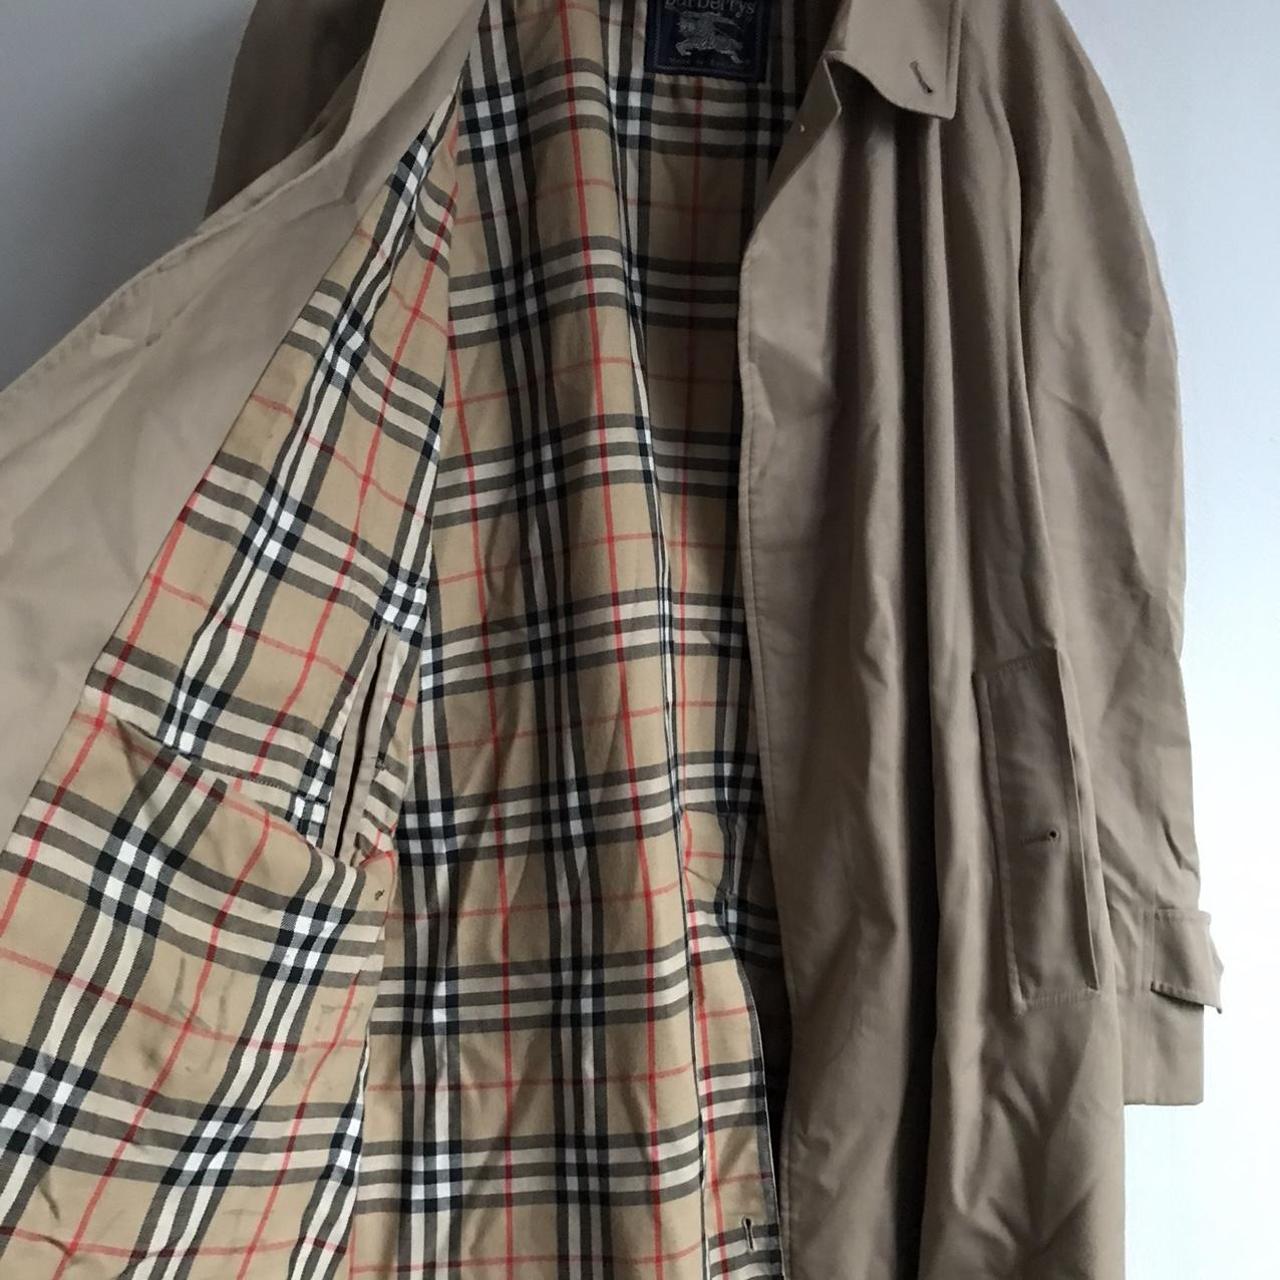 Stunning Burberry vintage trench coat , in amazing... - Depop